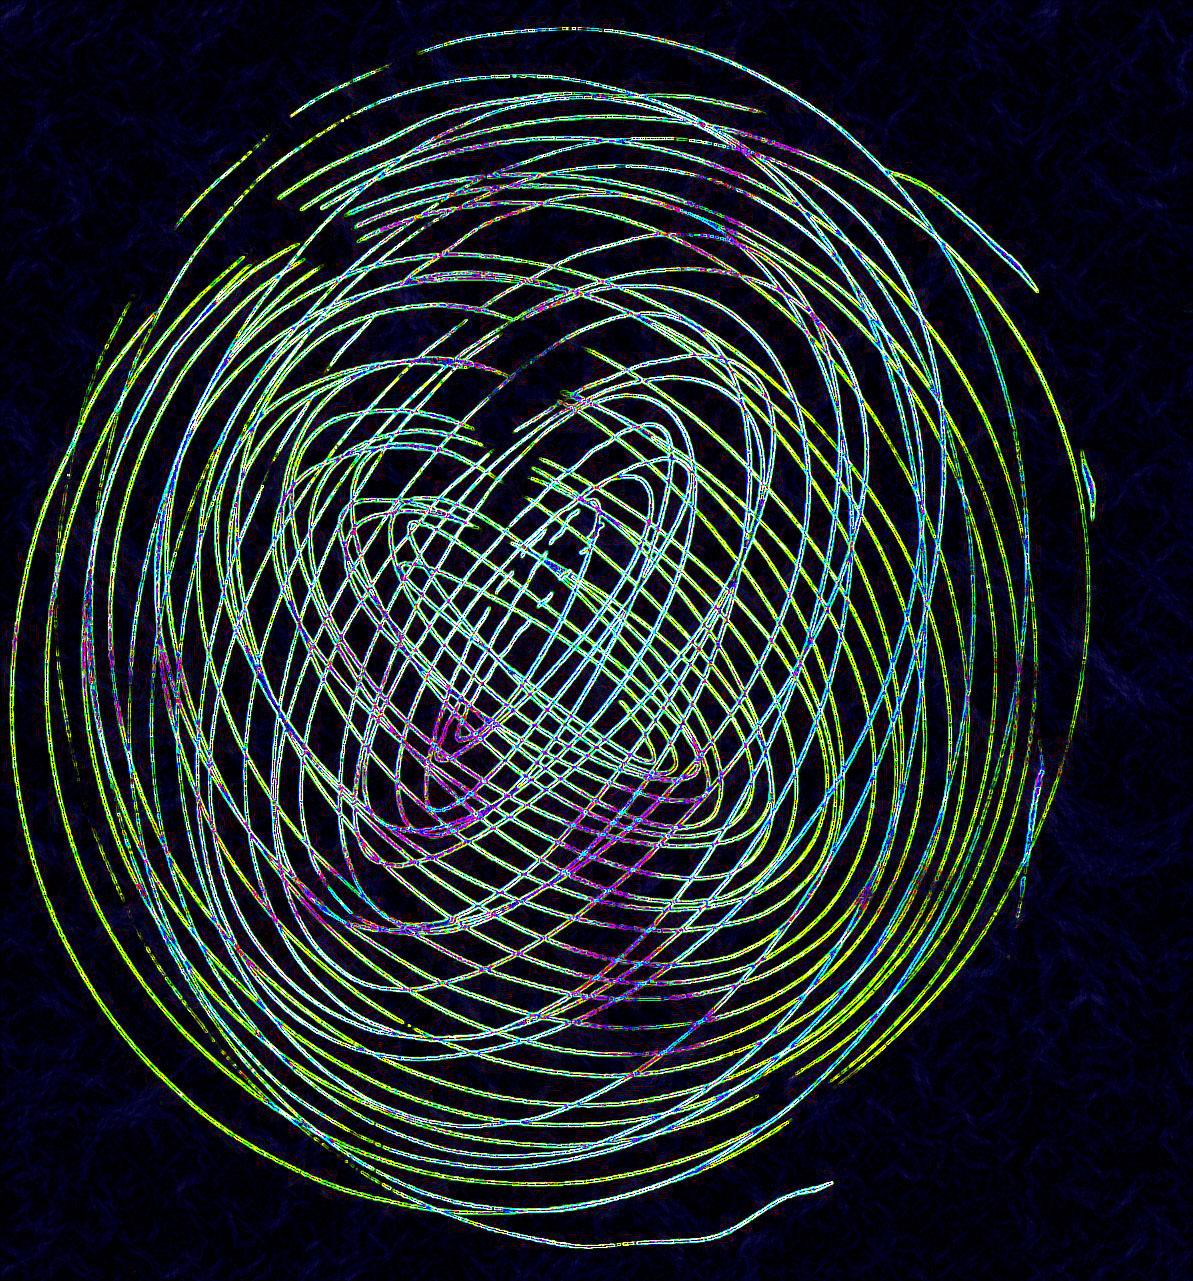 Image for entry 'Spiraling Spheres of Light'